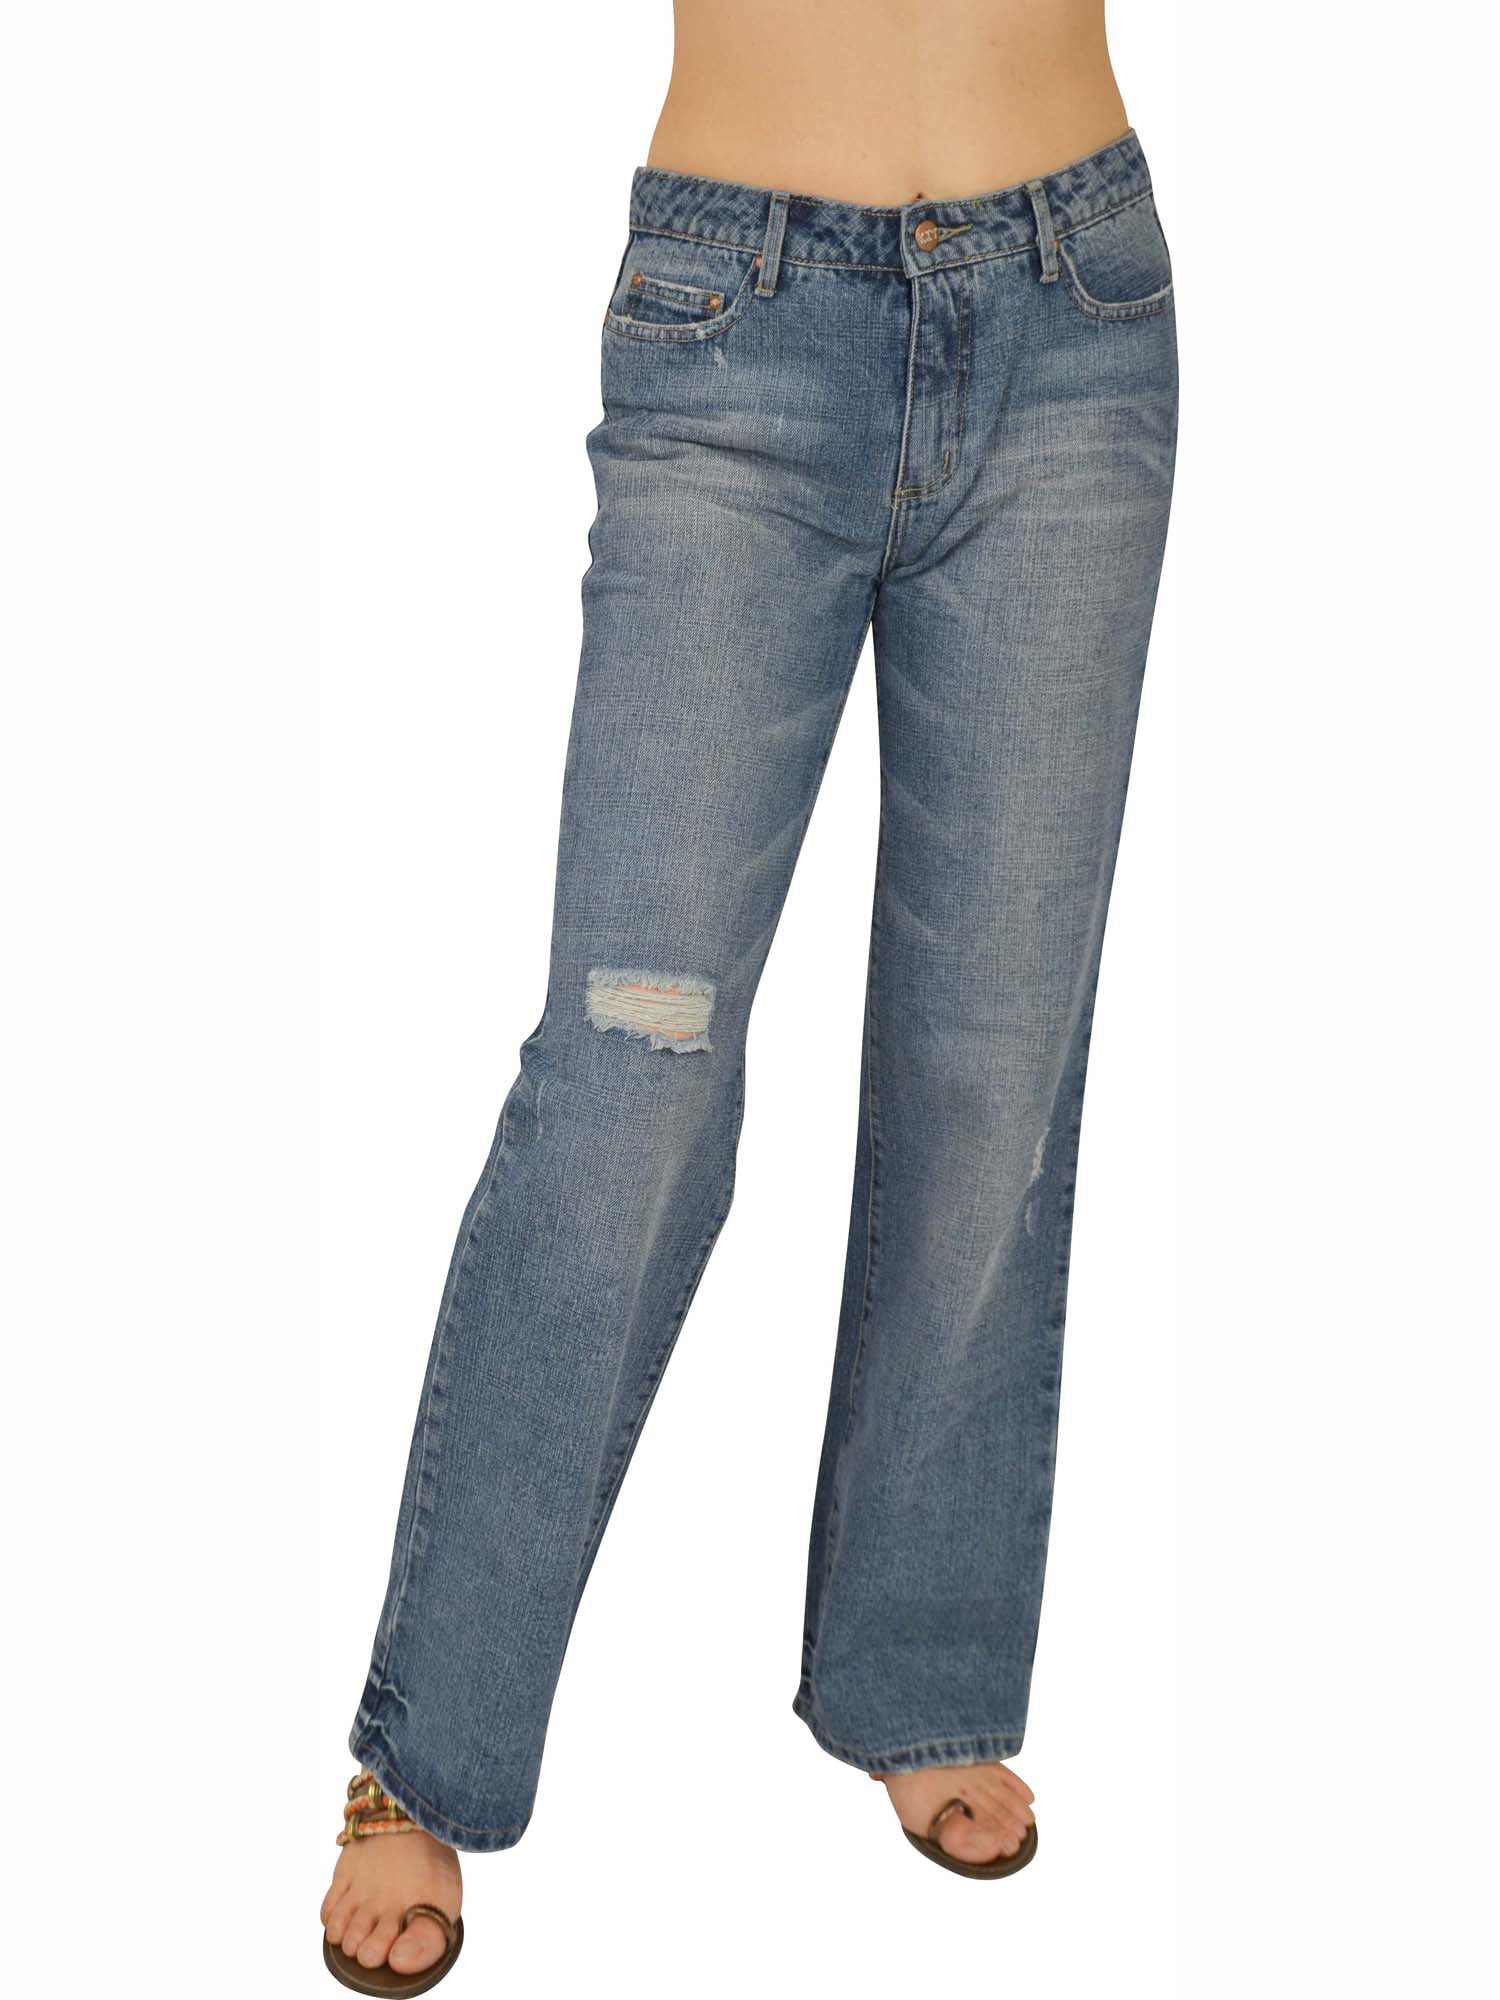 100 cotton jeans for women